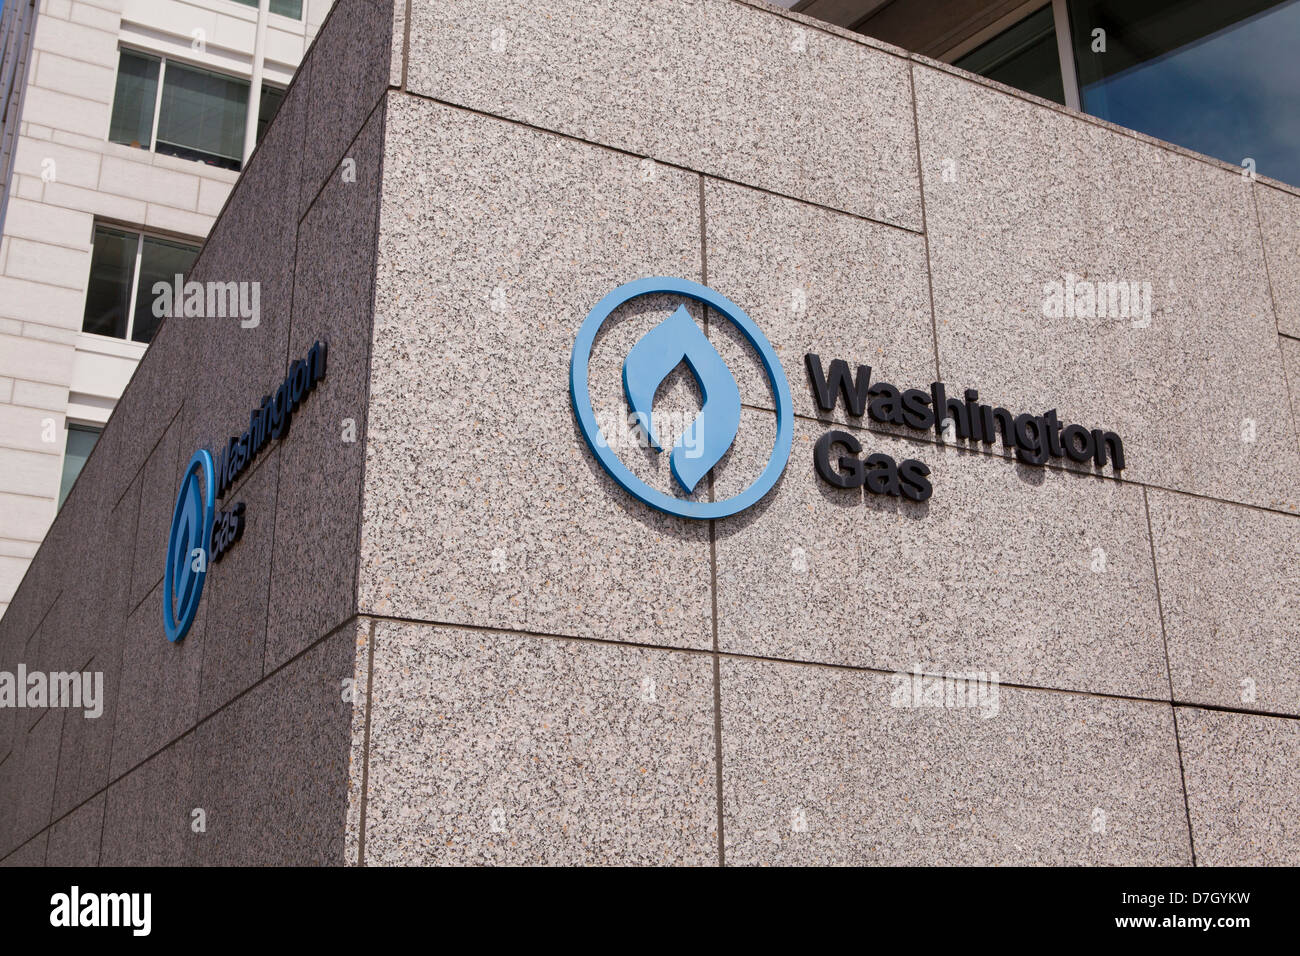 Washington Gas headquarters building Stock Photo